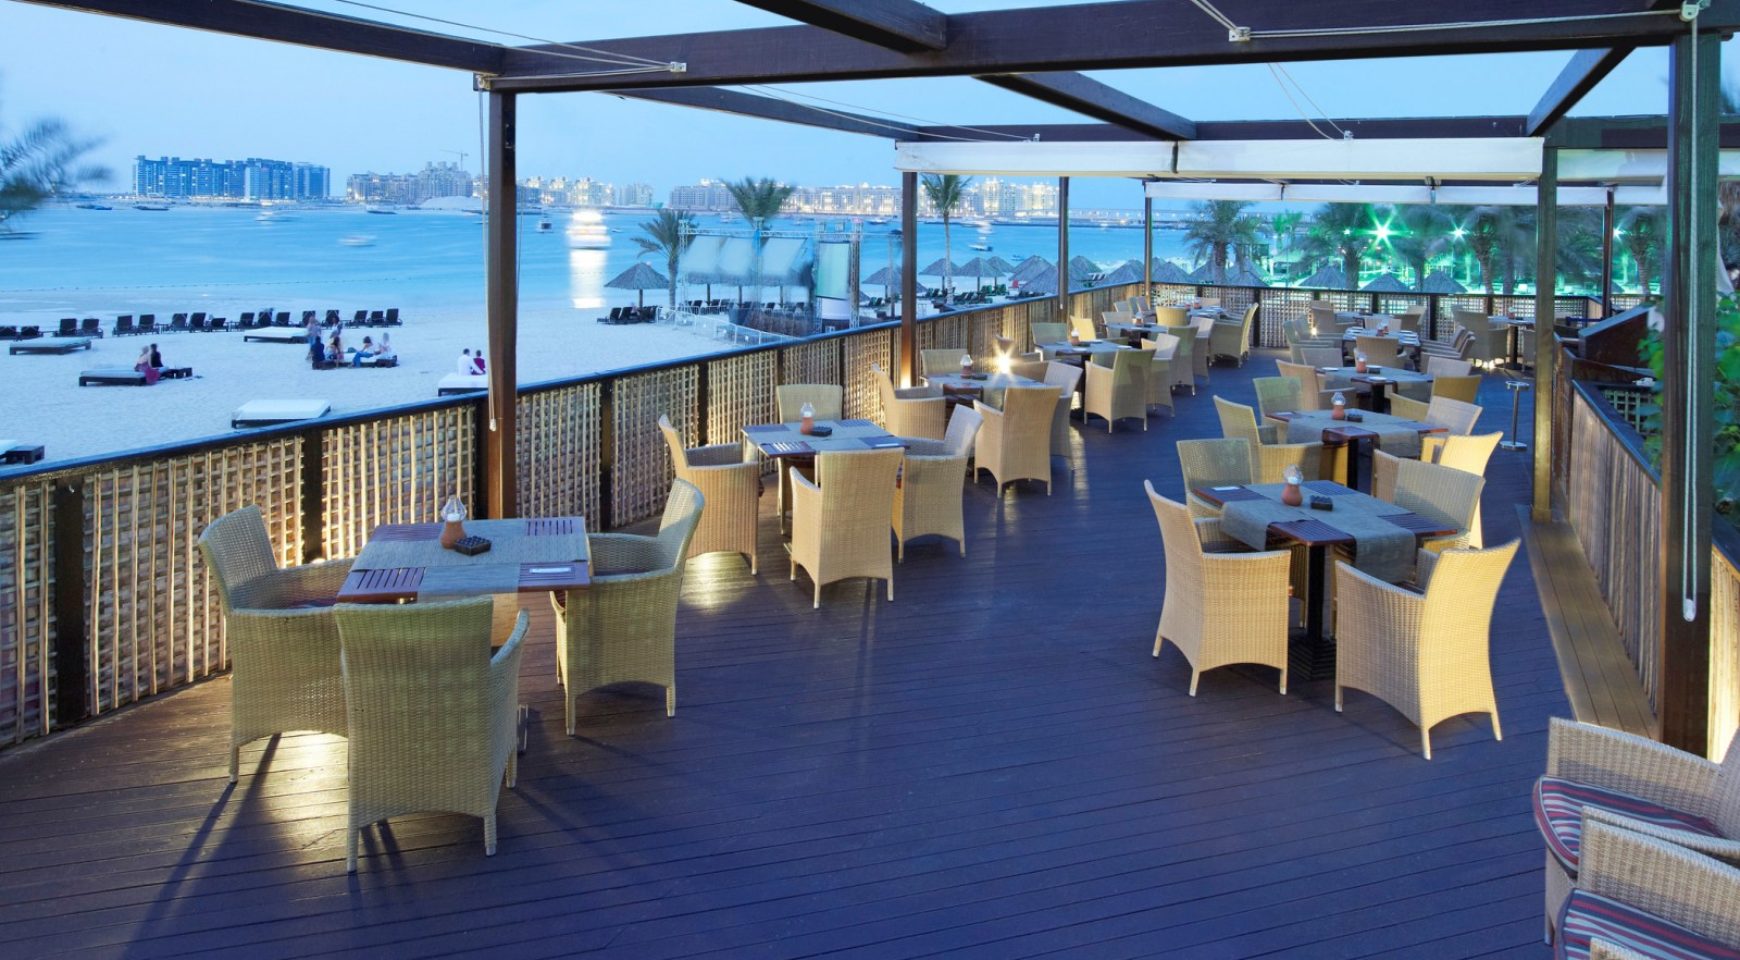 Le Meridien Mina Seyahi | | Dubai Restaurants Guide